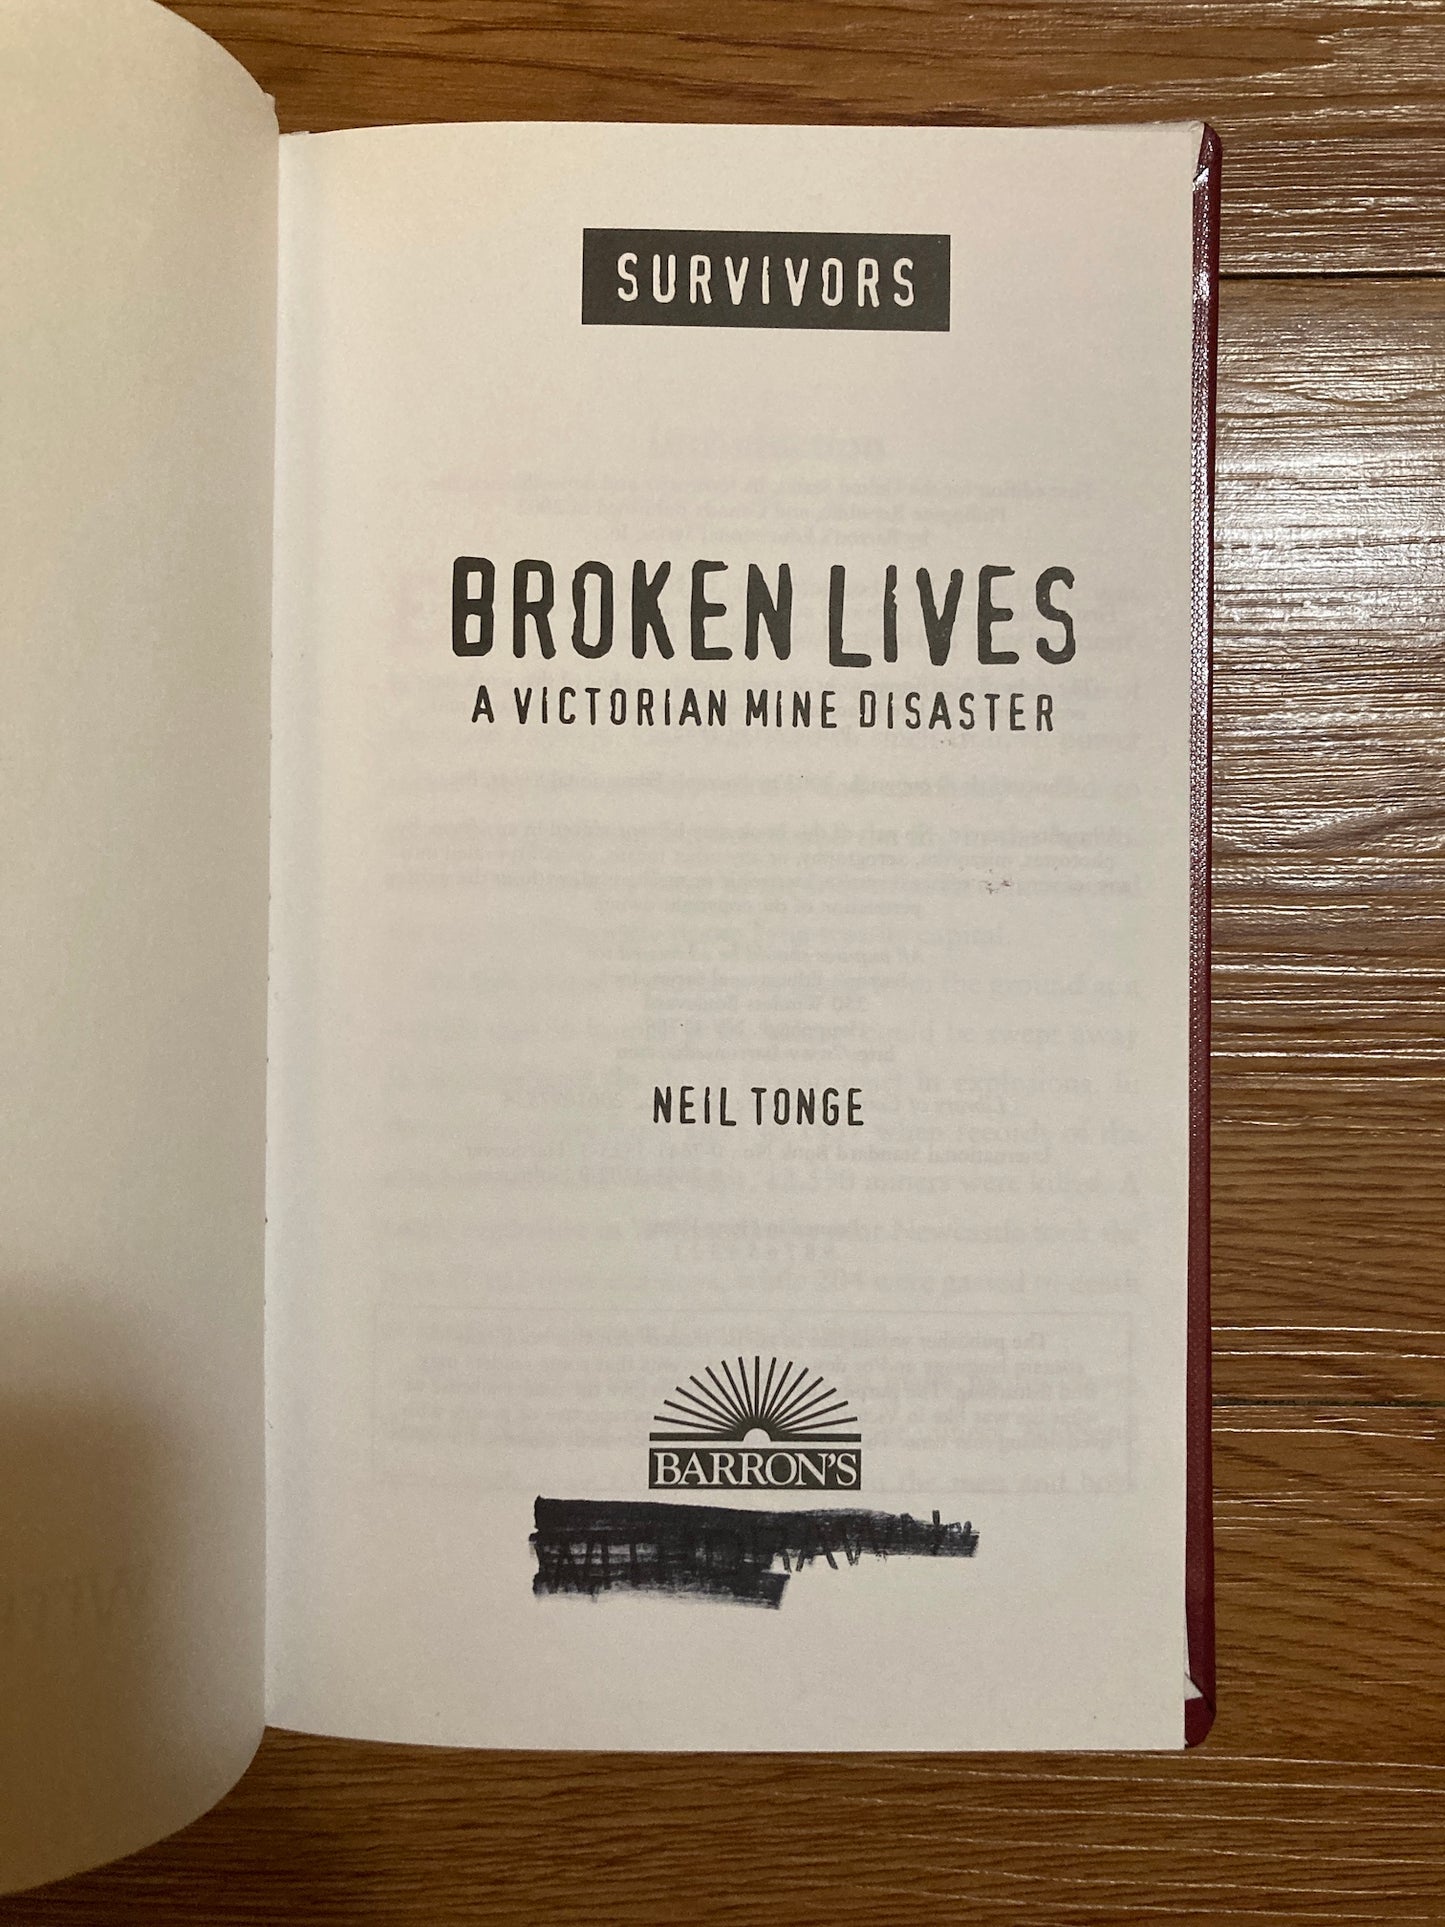 Broken Lives: A Victorian Mine Disaster (Survivors Series)